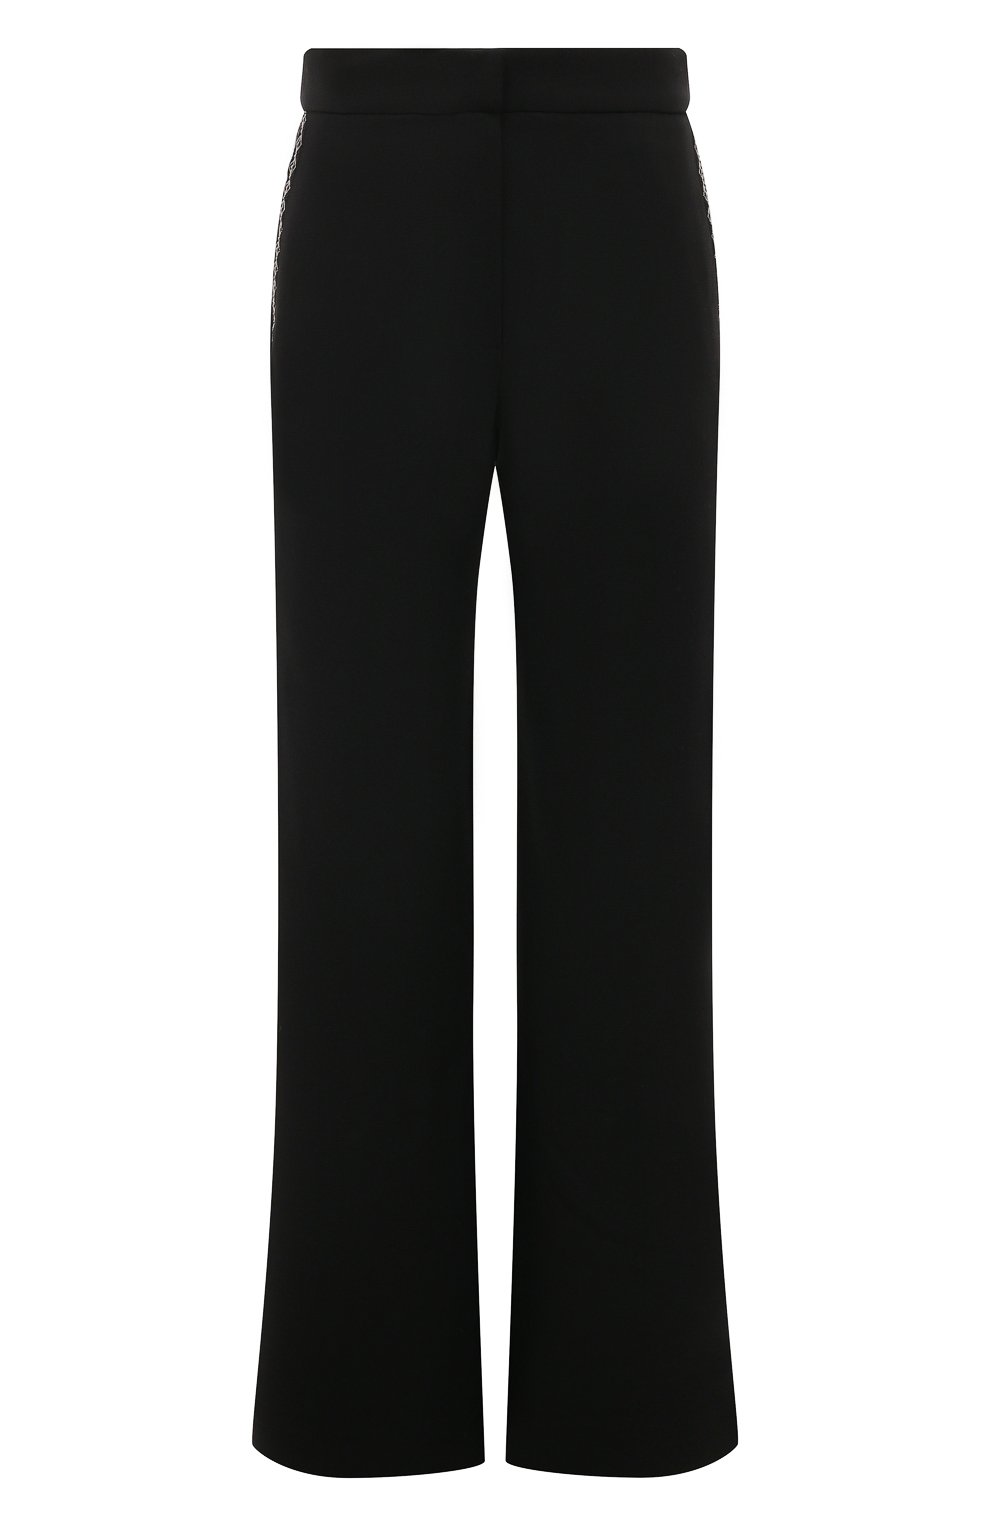 Black Pants with White Stitching  Наряд с черными брюками